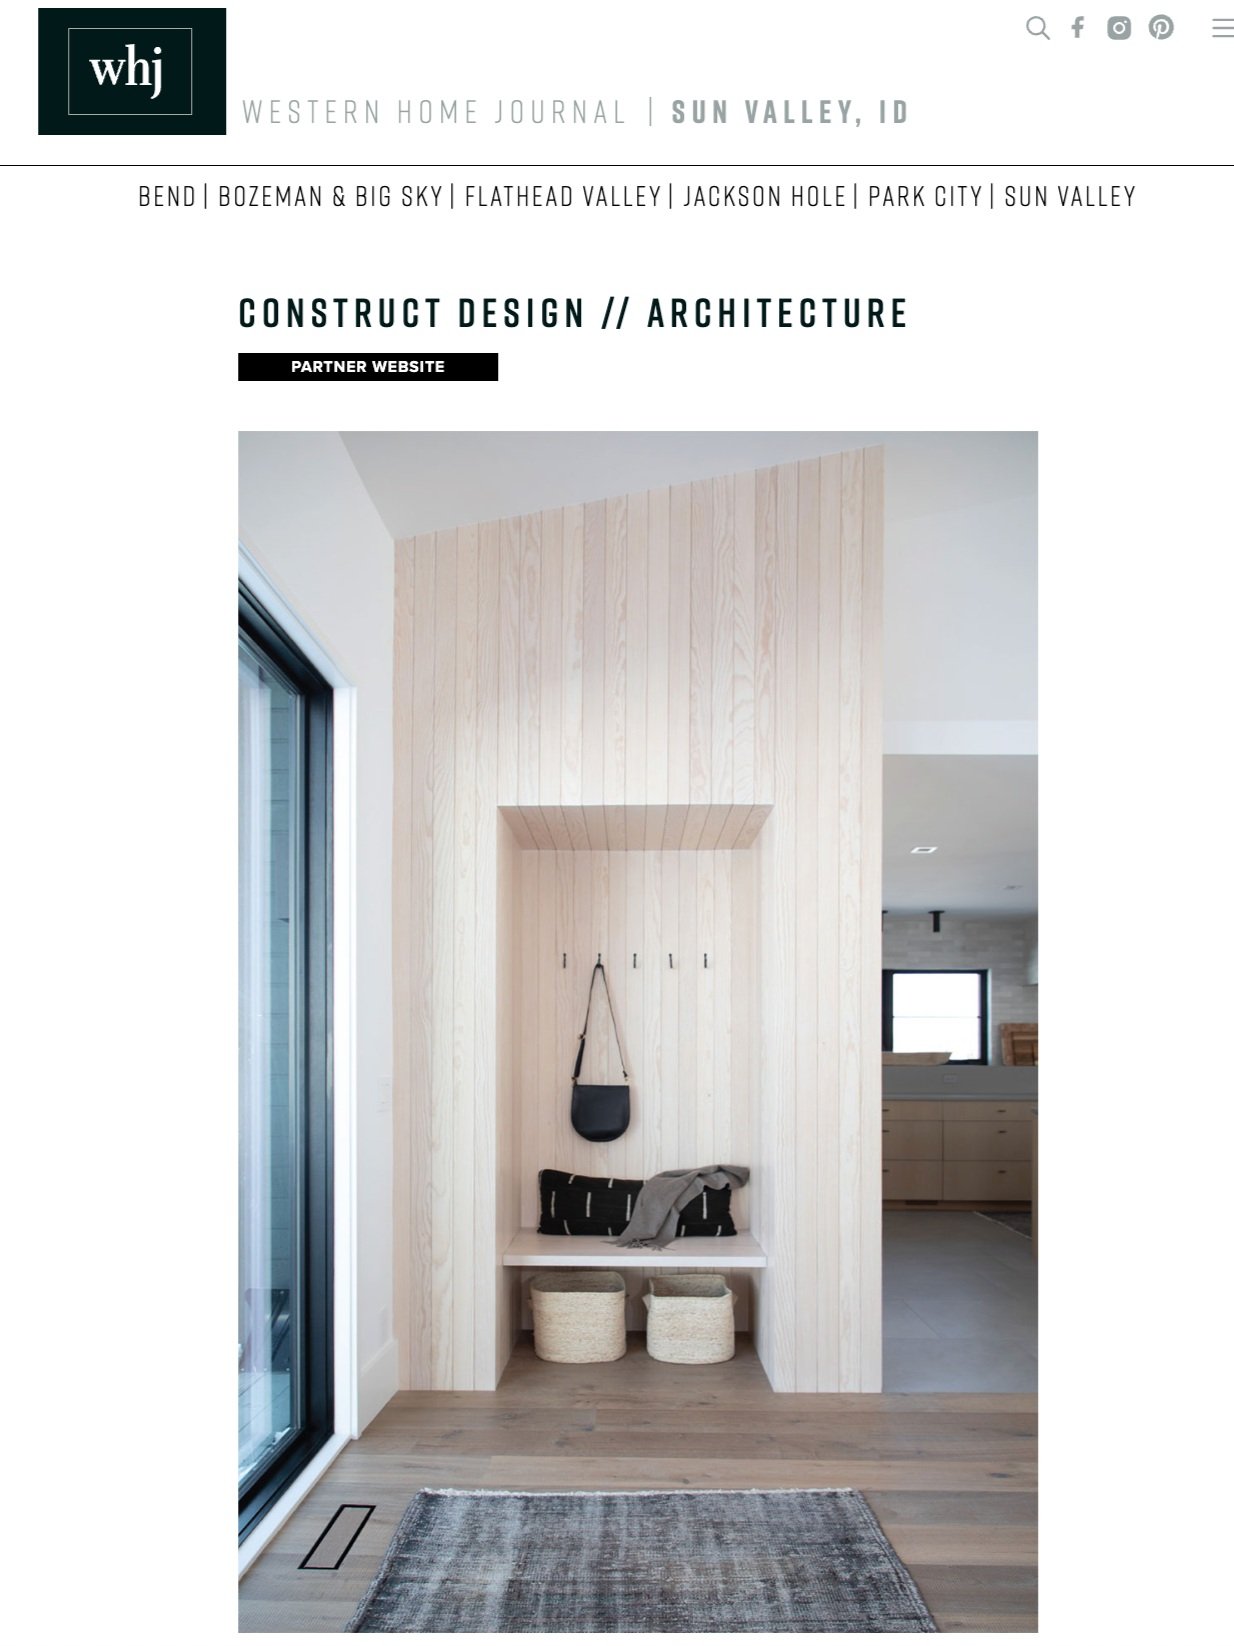  Interior design with Caroline Wilding of ConstructDA in Western Home Journal